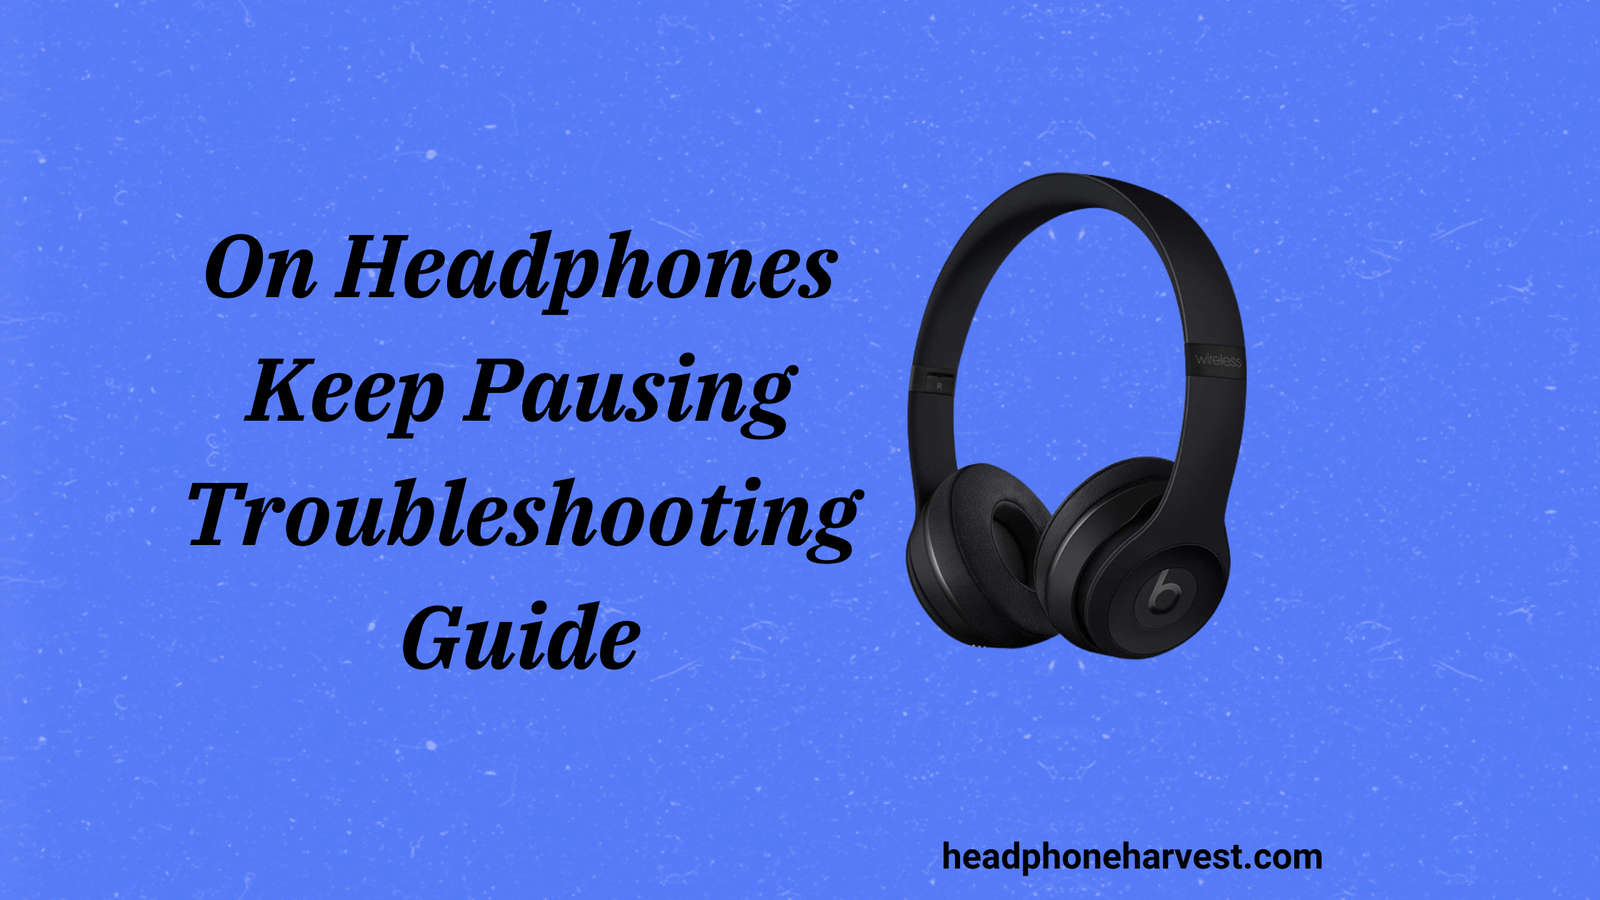 On Headphones Keep Pausing